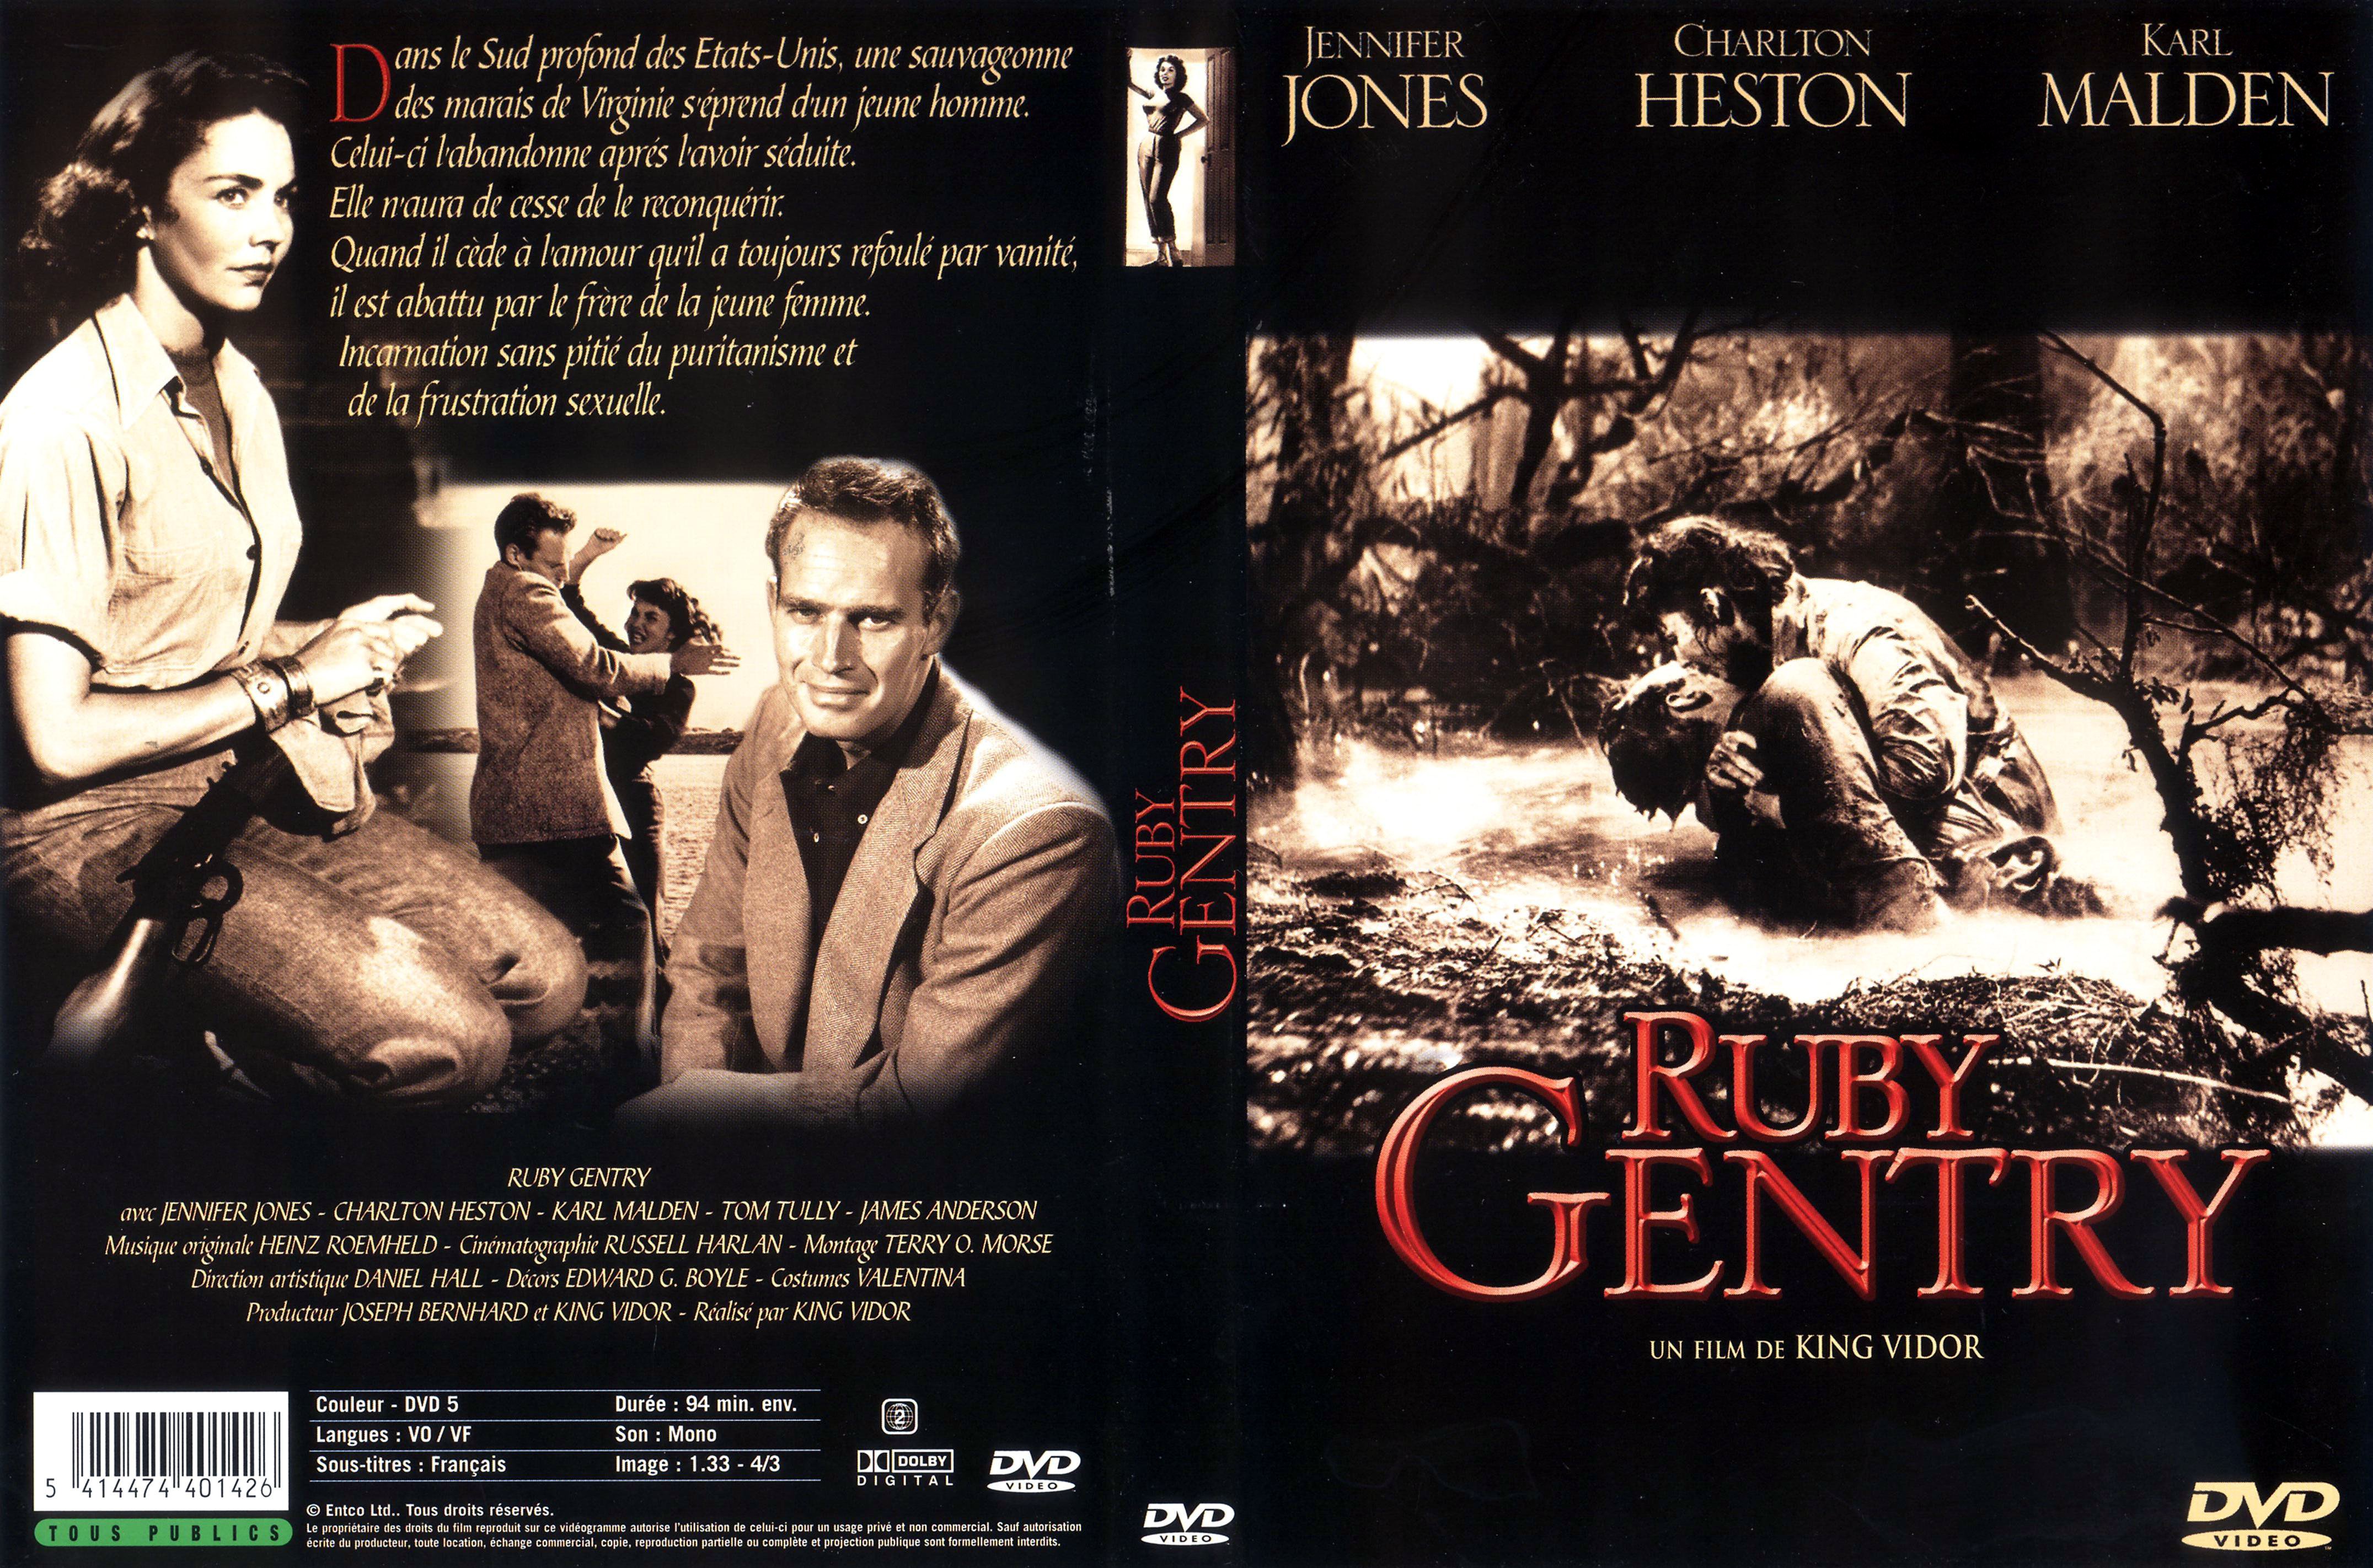 Jaquette DVD La furie du desir (Ruby Gentry)